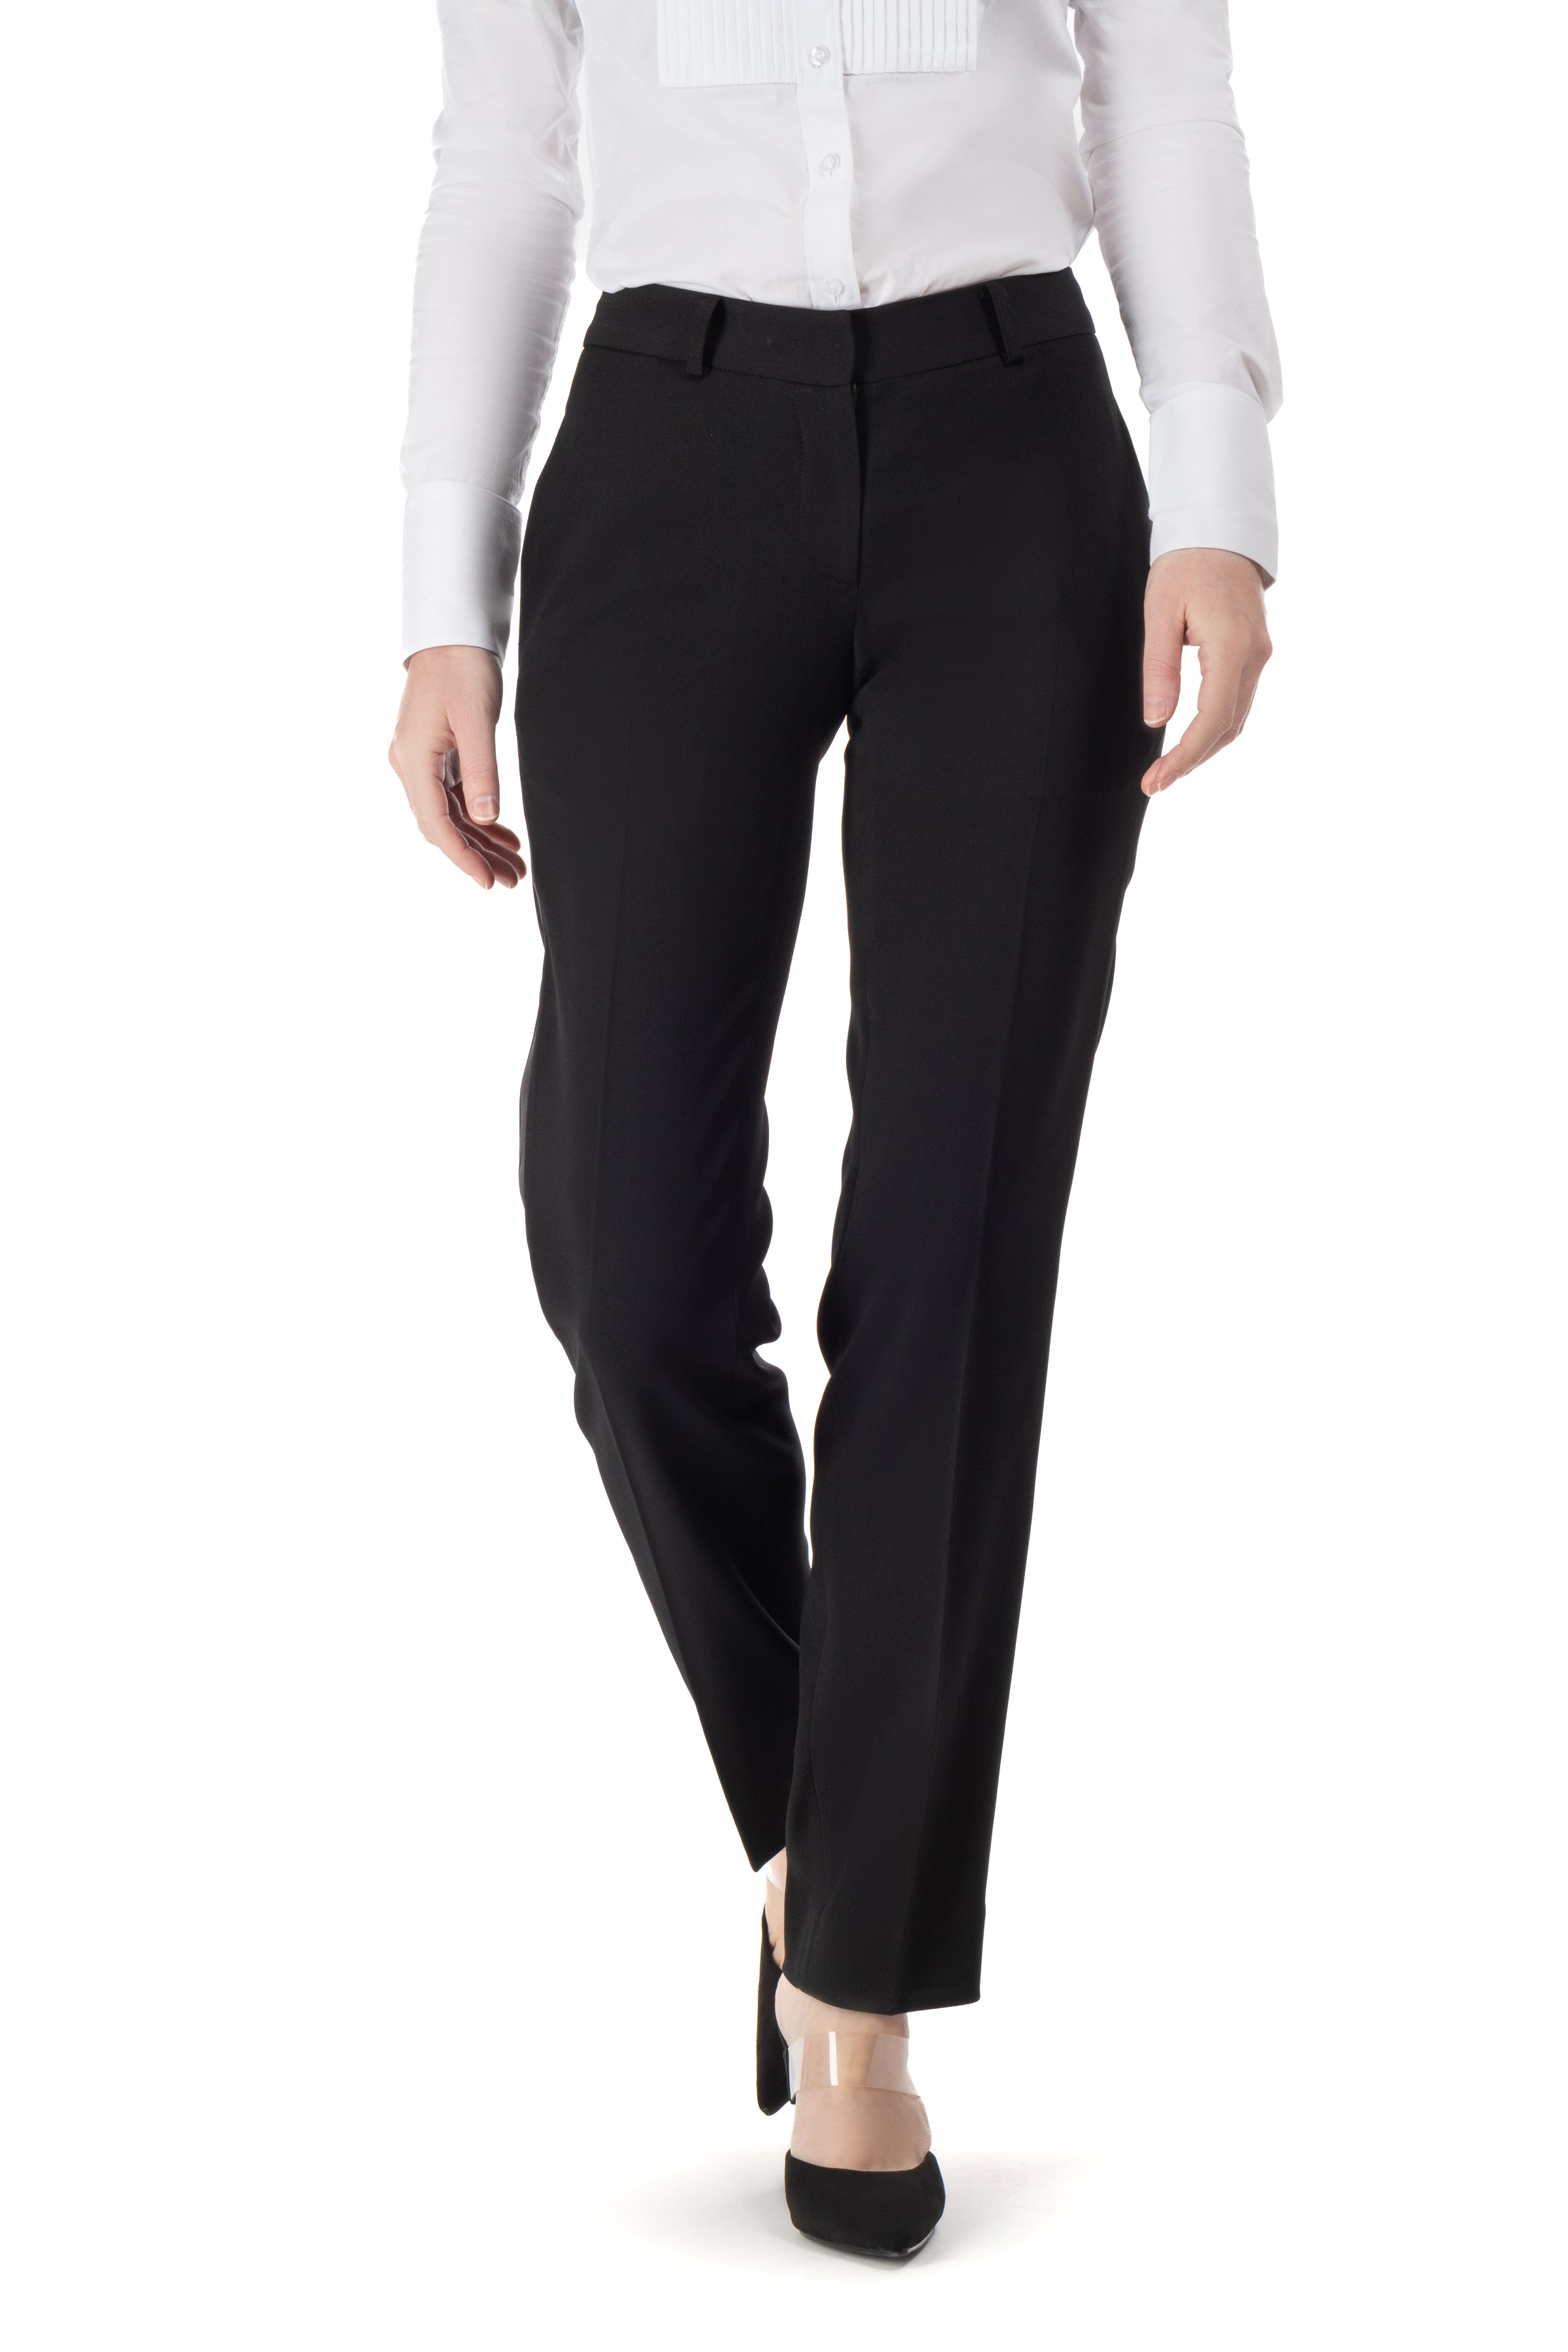 Black Slim Fit Tuxedo Pants for Women – LITTLE BLACK TUX